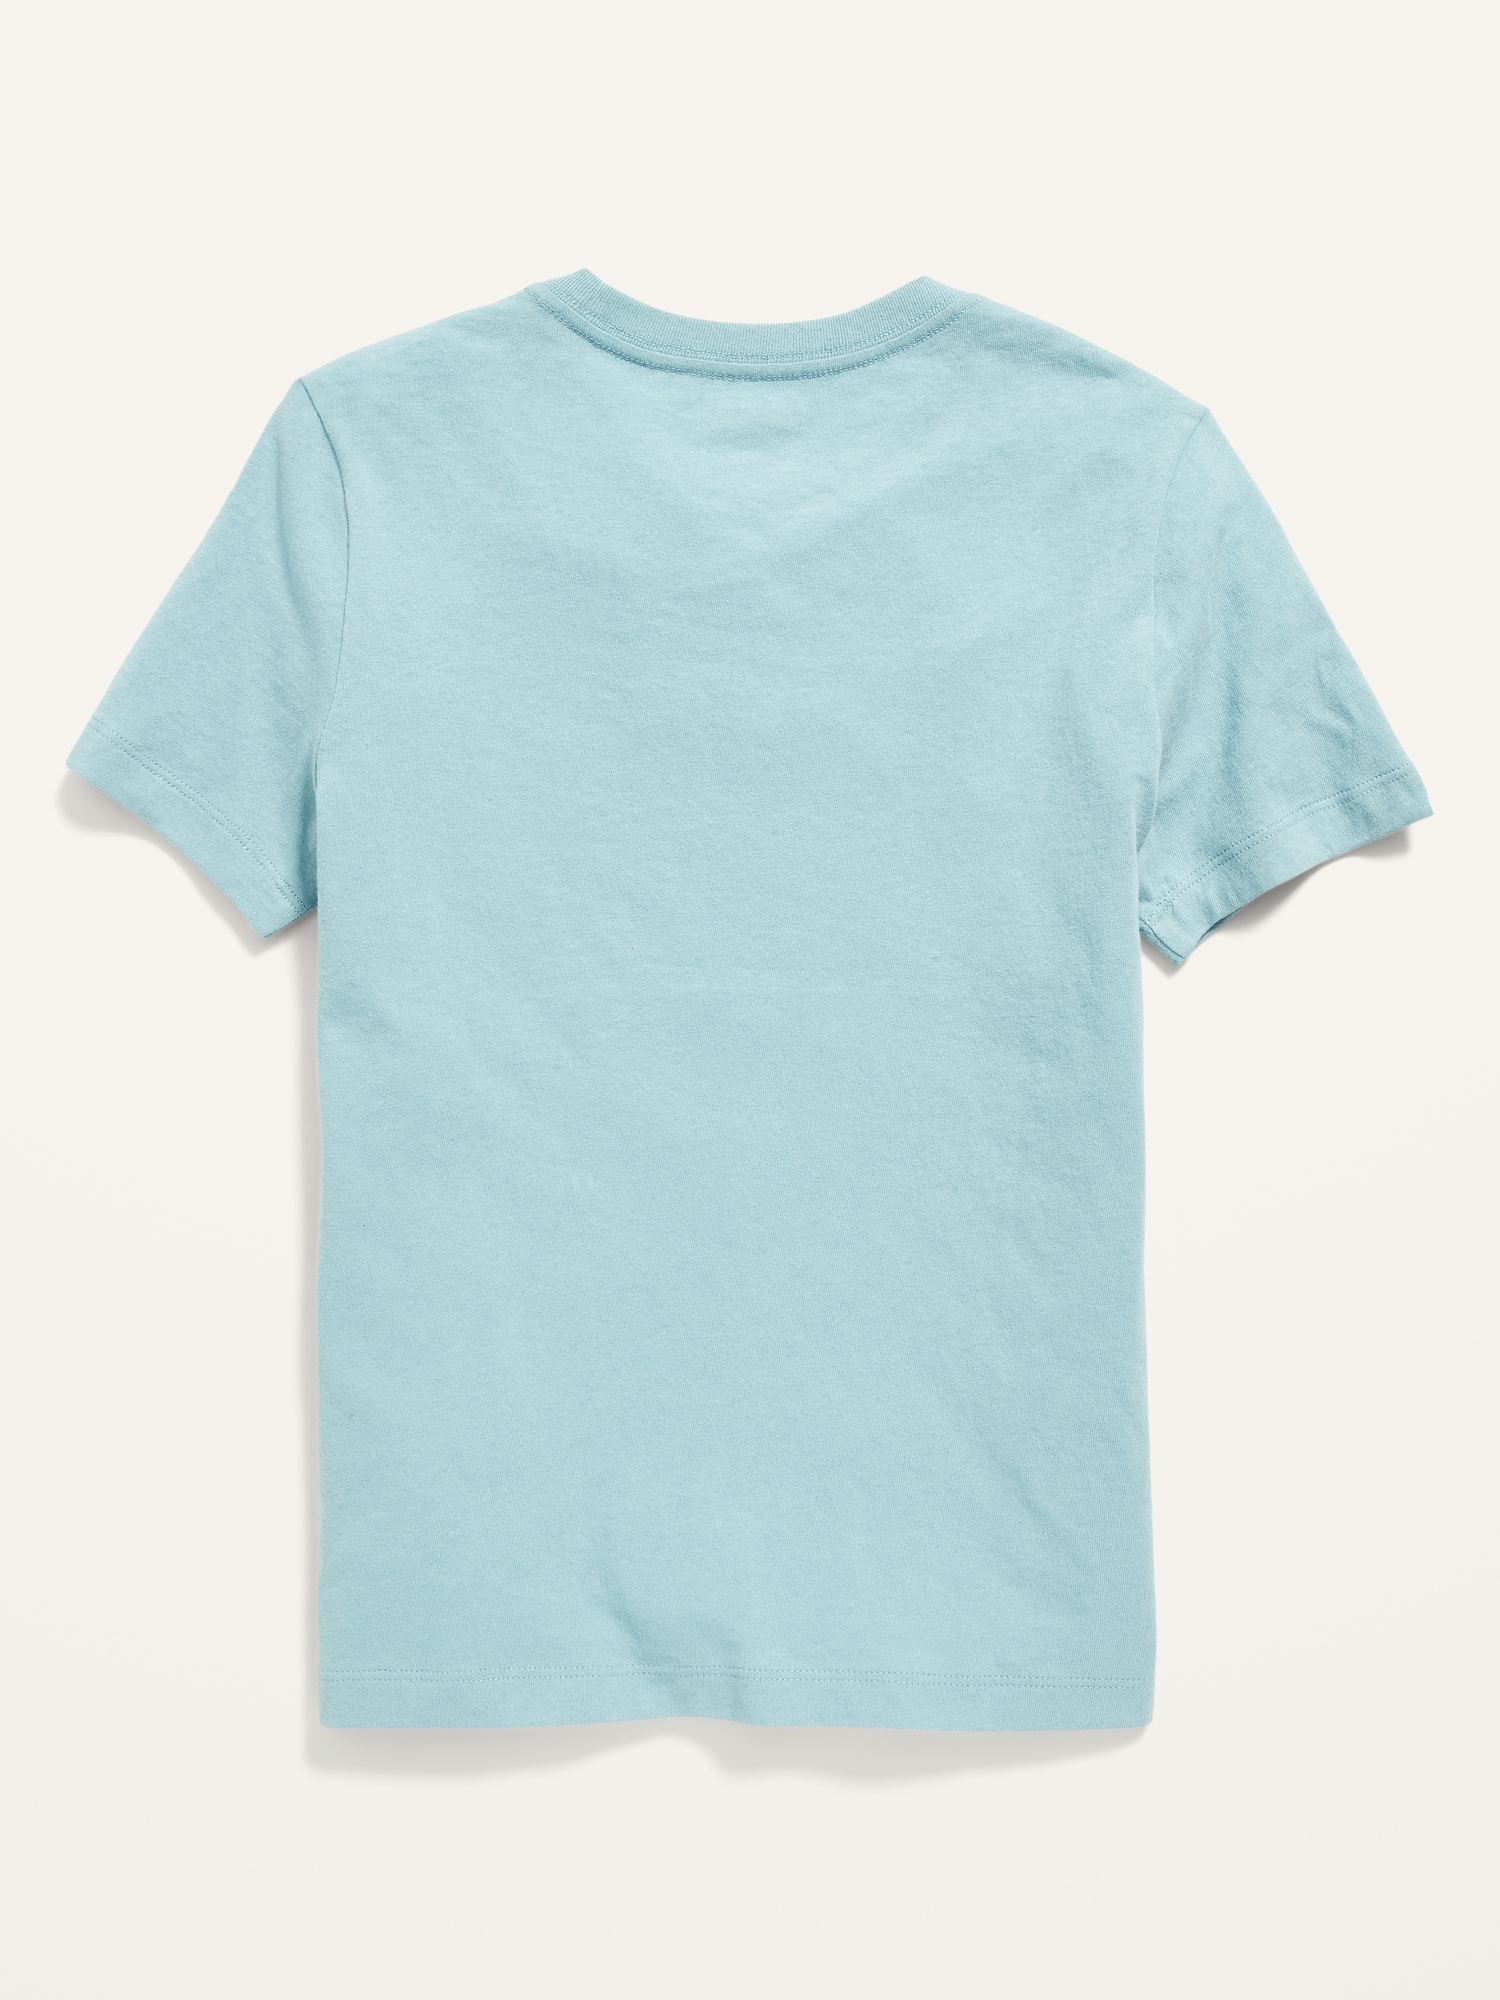 Old Navy Teenage Mutant Ninja Turtles gender-neutral Graphic T-Shirt - - Size L